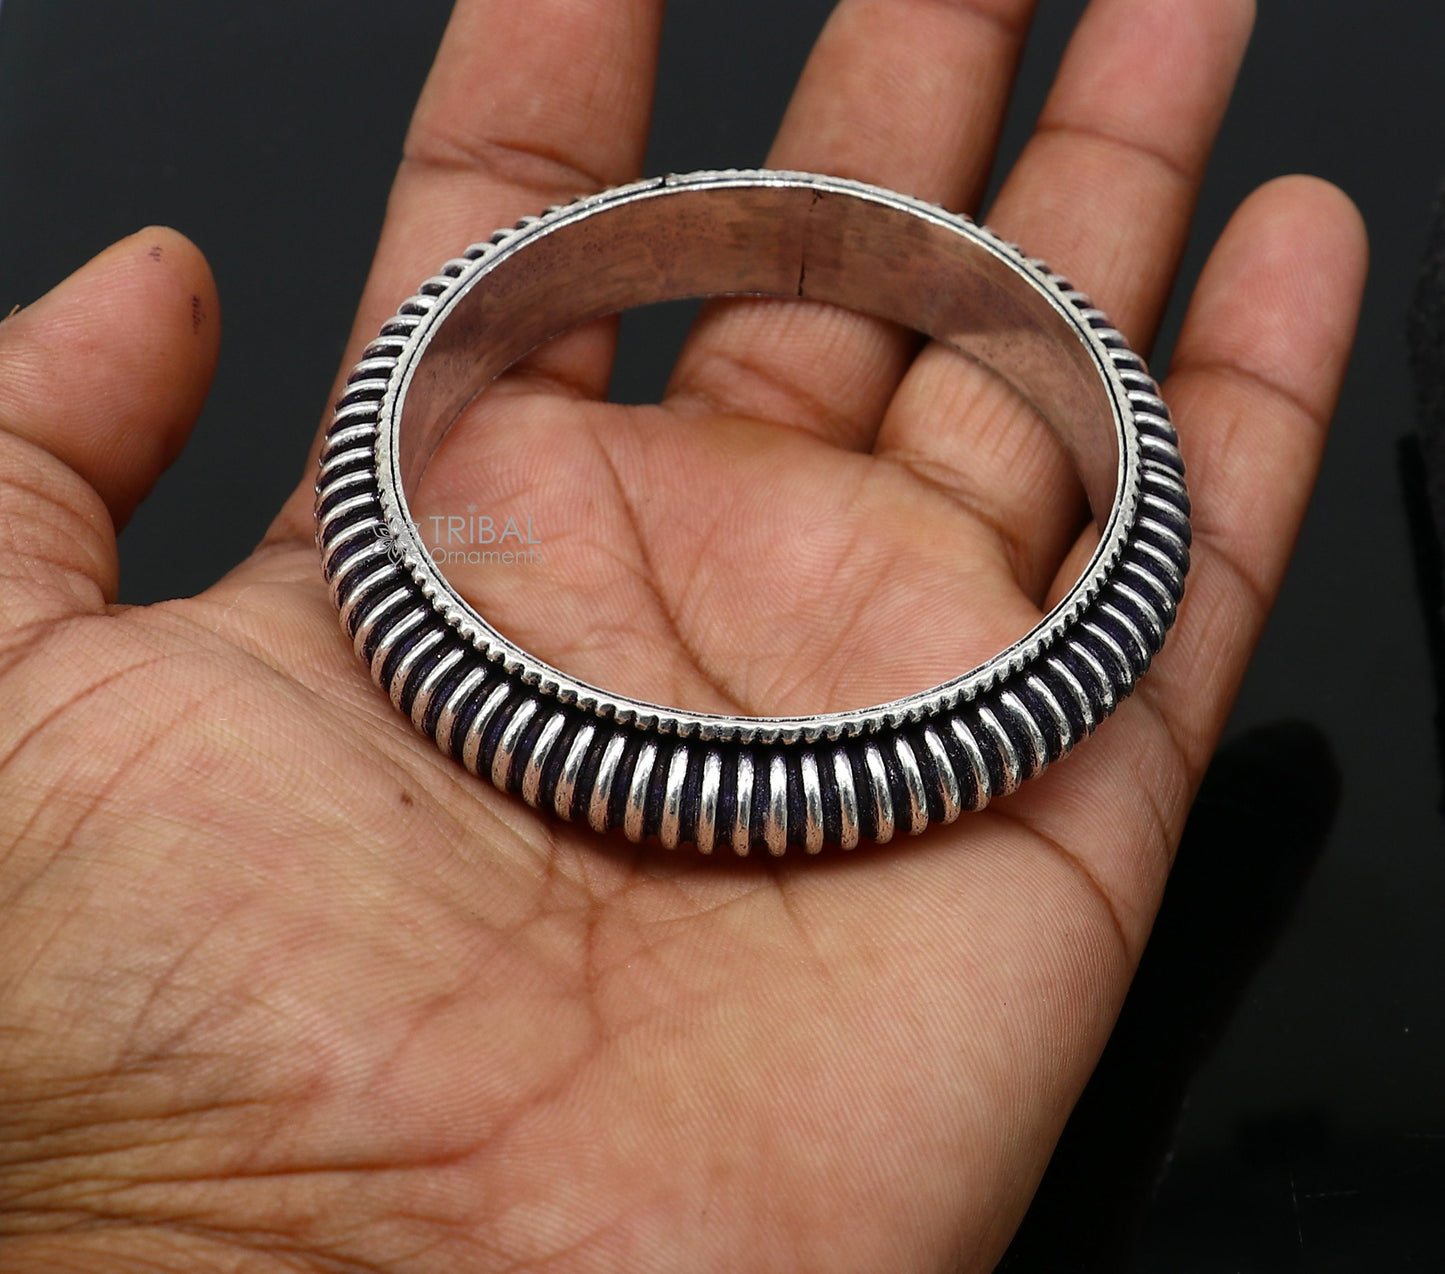 925 Sterling silver handmade modern trendy cultural bangle bracelet kada unisex personalized  functional tribal jewelry nsk750 - TRIBAL ORNAMENTS